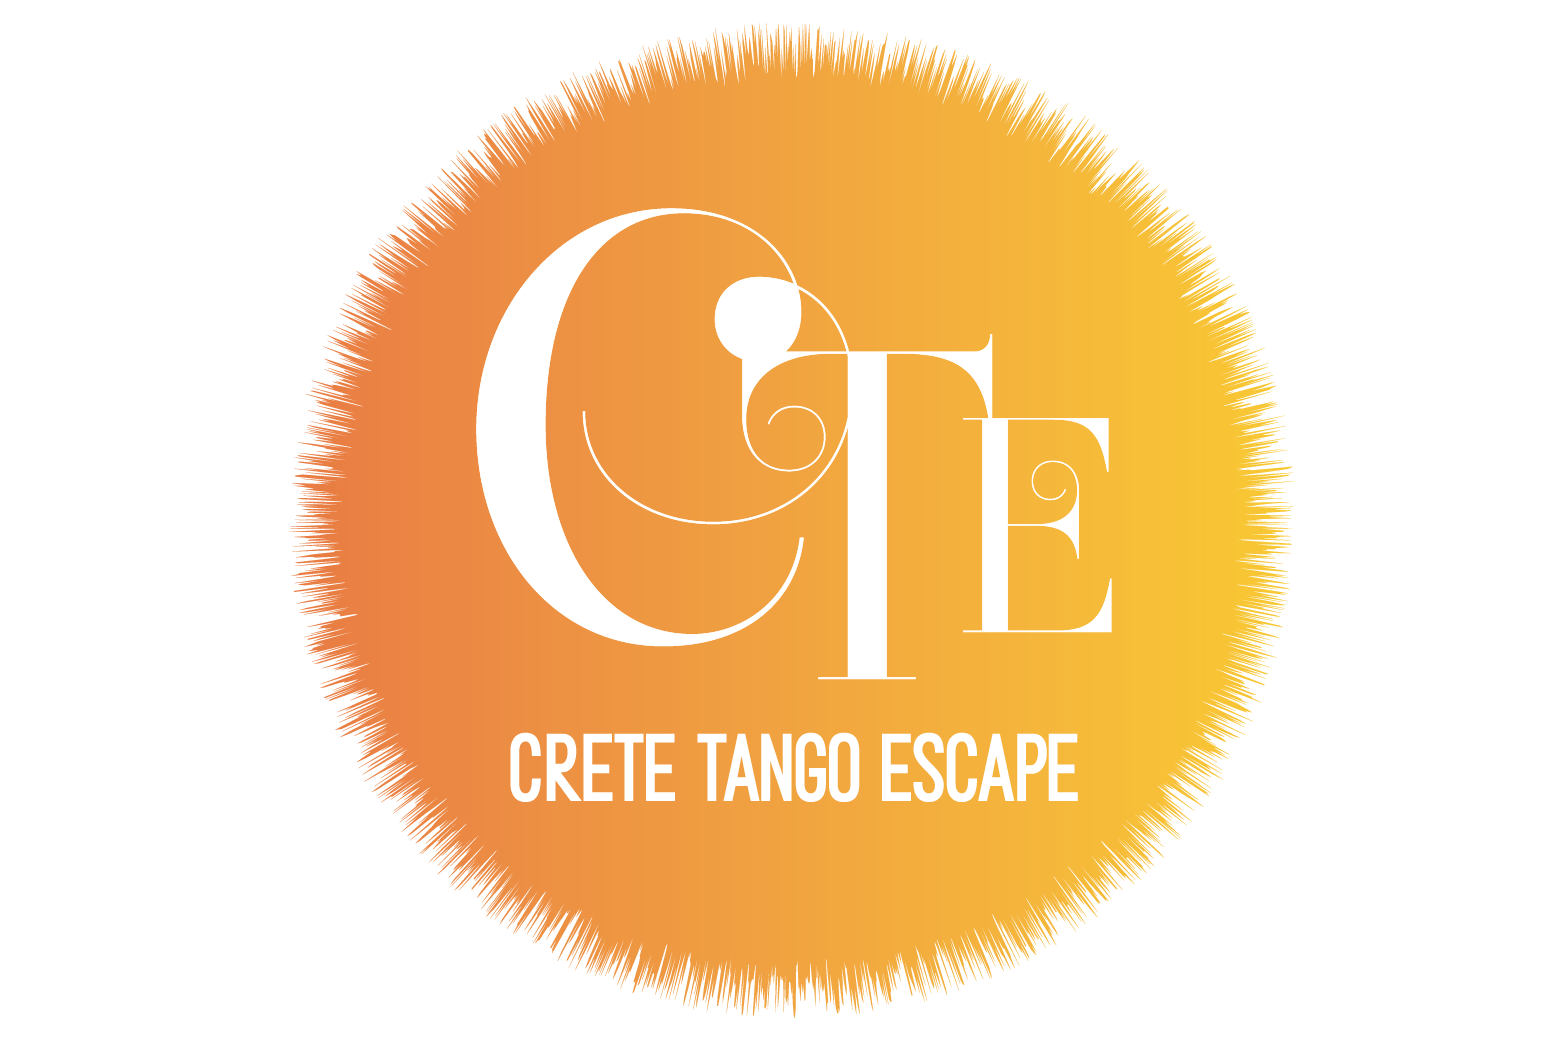 Crete Tango Escape sunset logo: 24 September to 8 October 2022